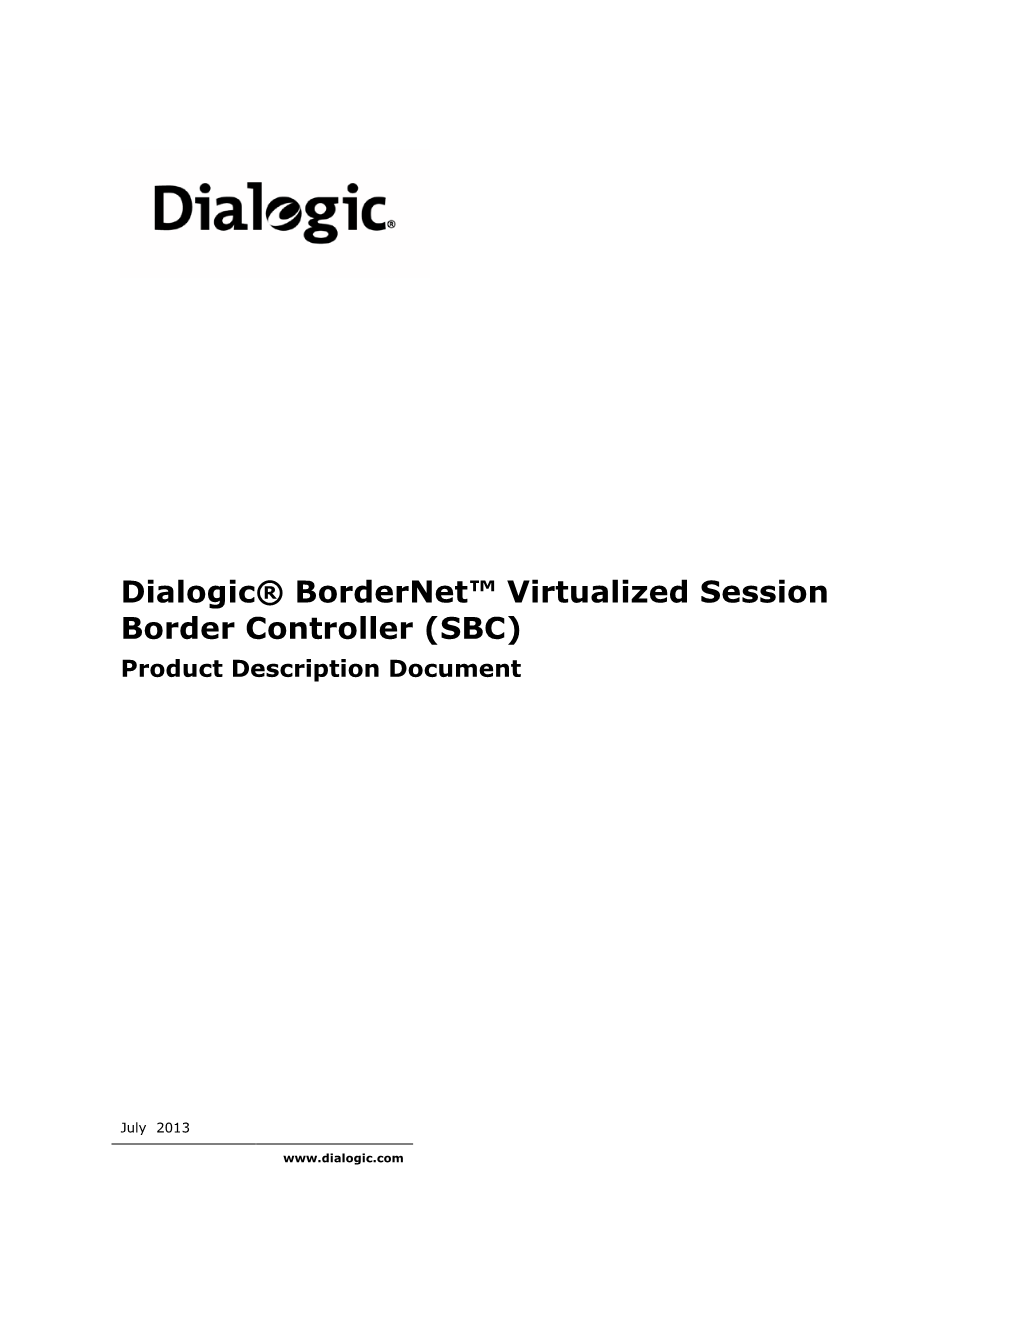 Dialogic® Bordernet™ Virtualized Session Border Controller (SBC) Product Description Document